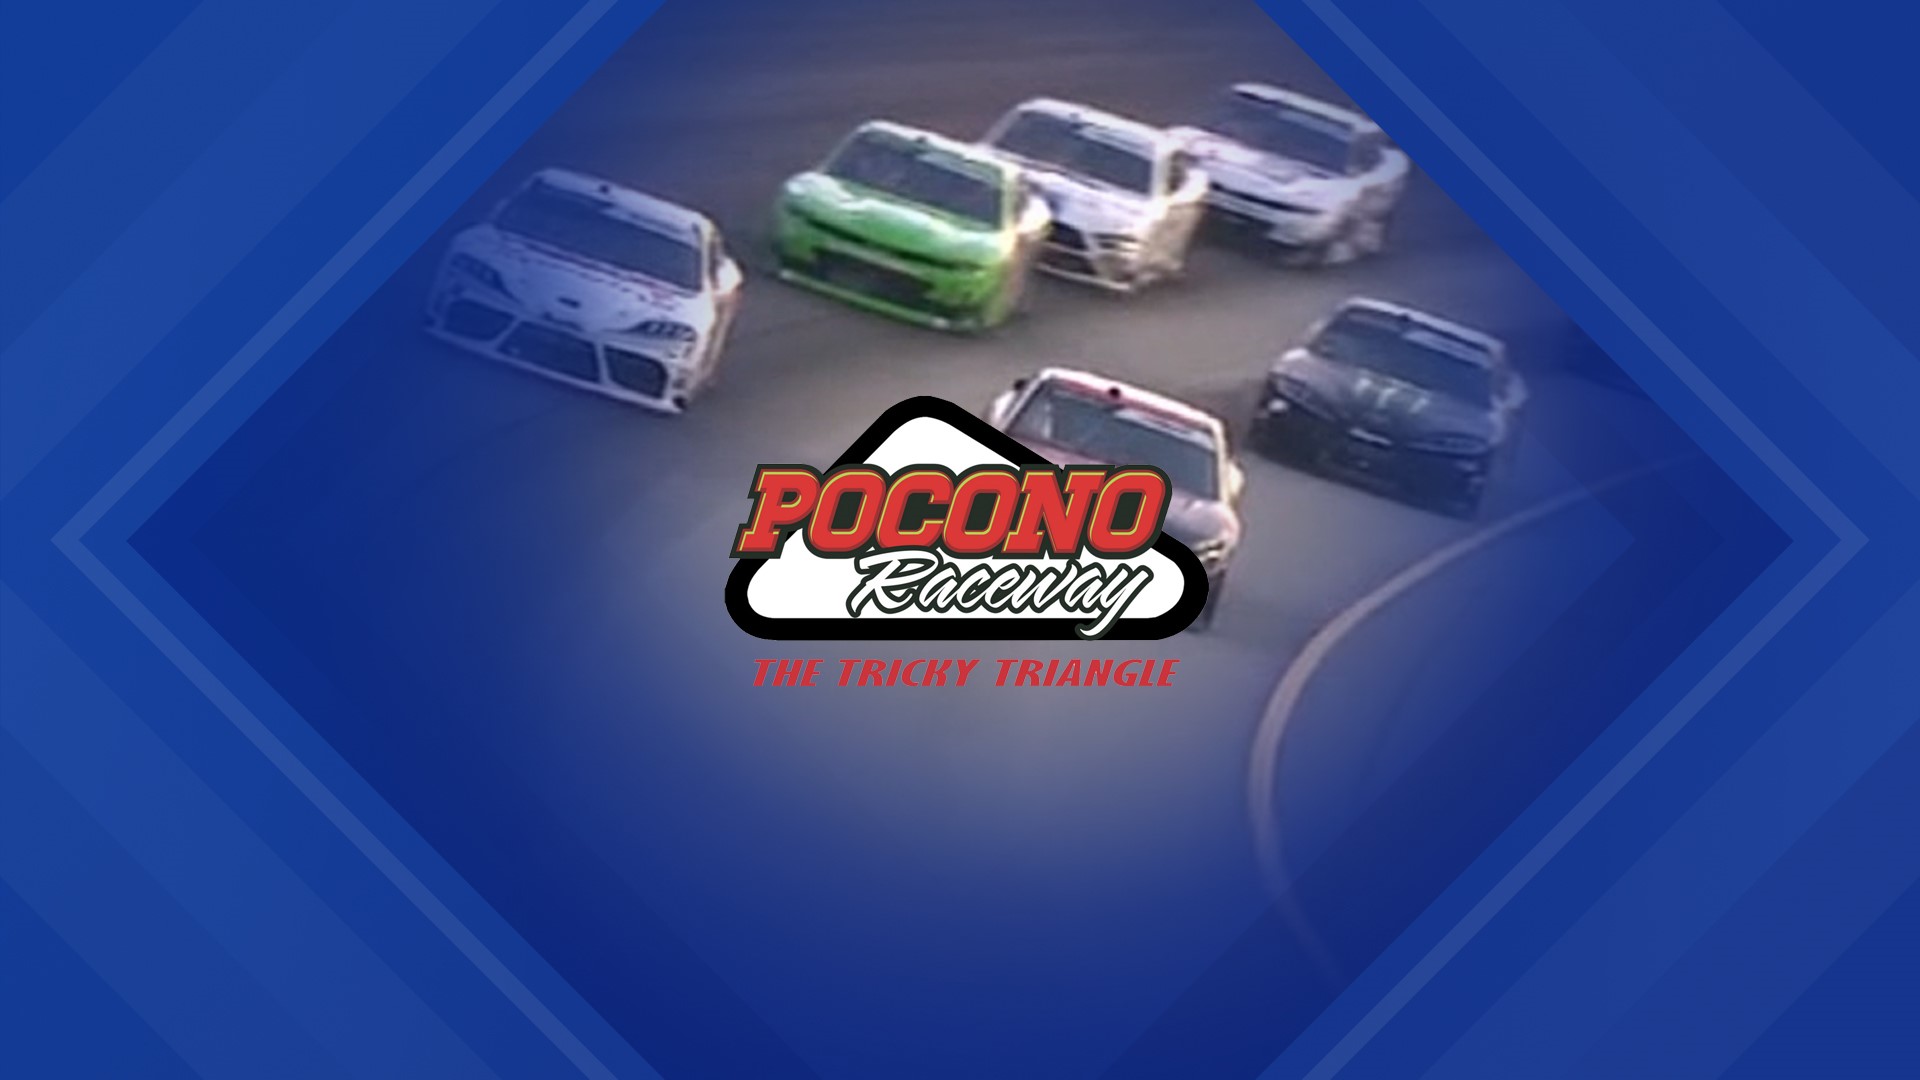 Only one NASCAR race at Pocono Raceway next year wnep